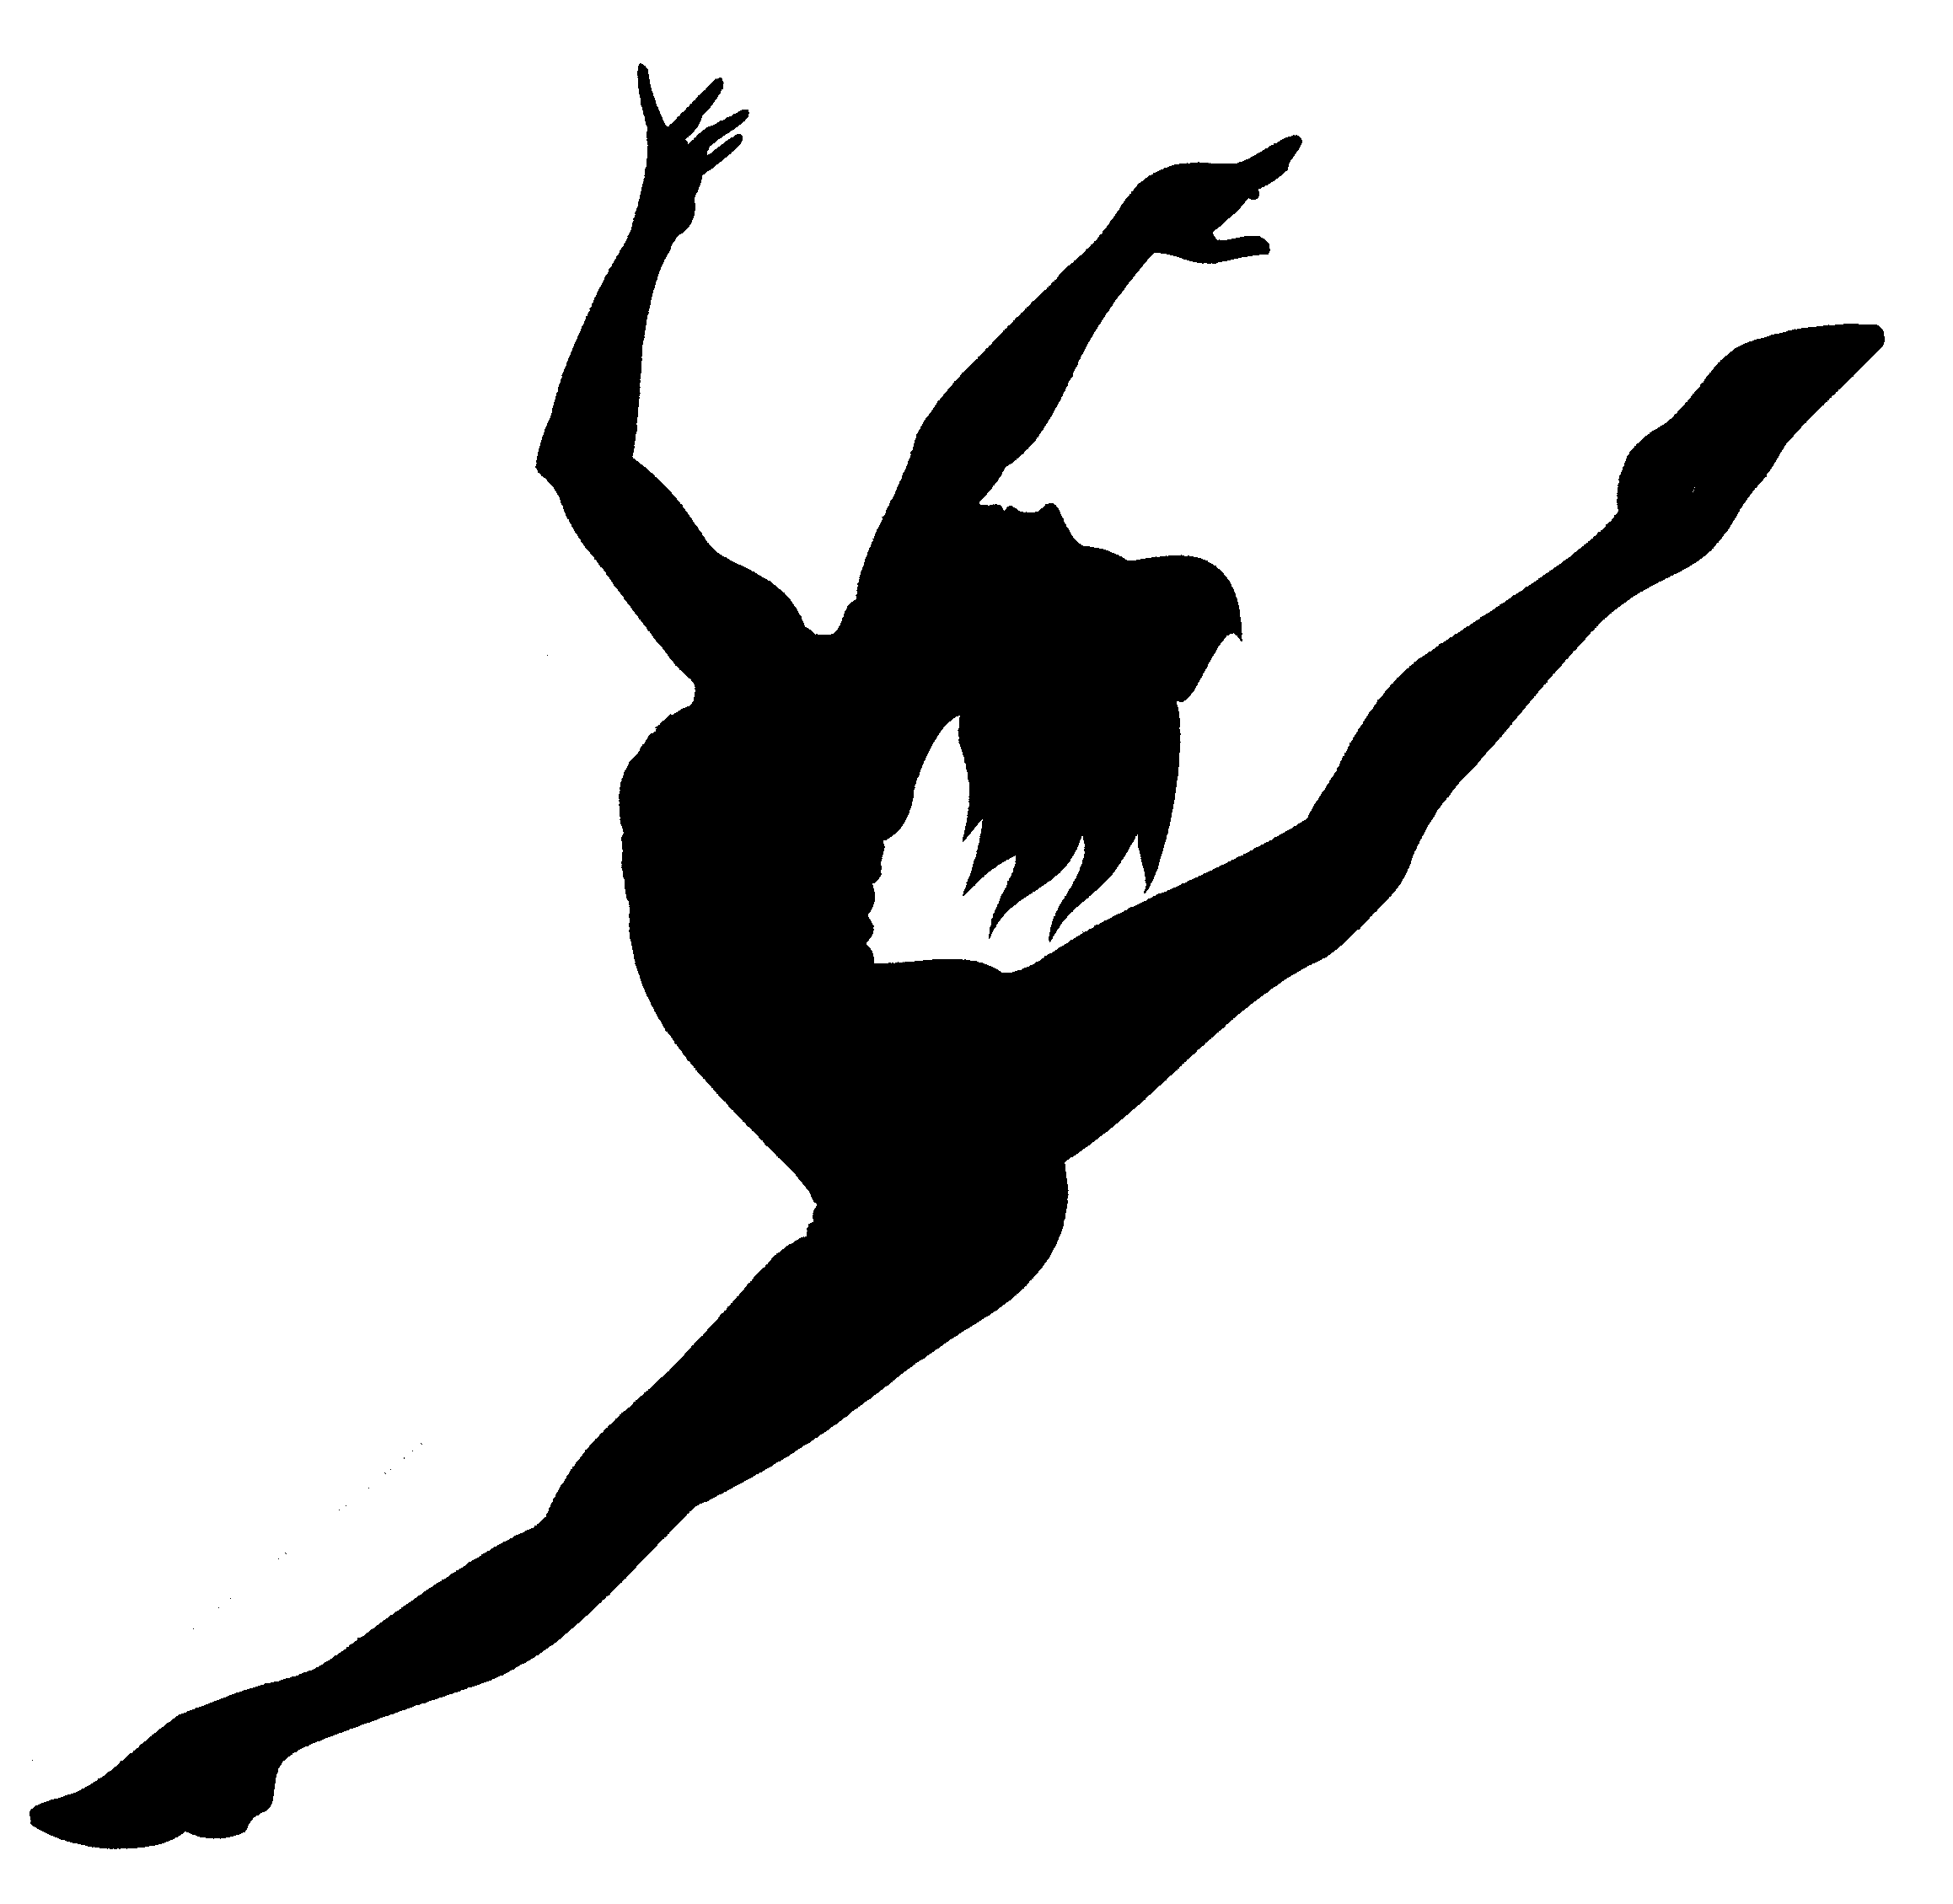 Dancer silhouette scorpion | Clipart Panda - Free Clipart Images